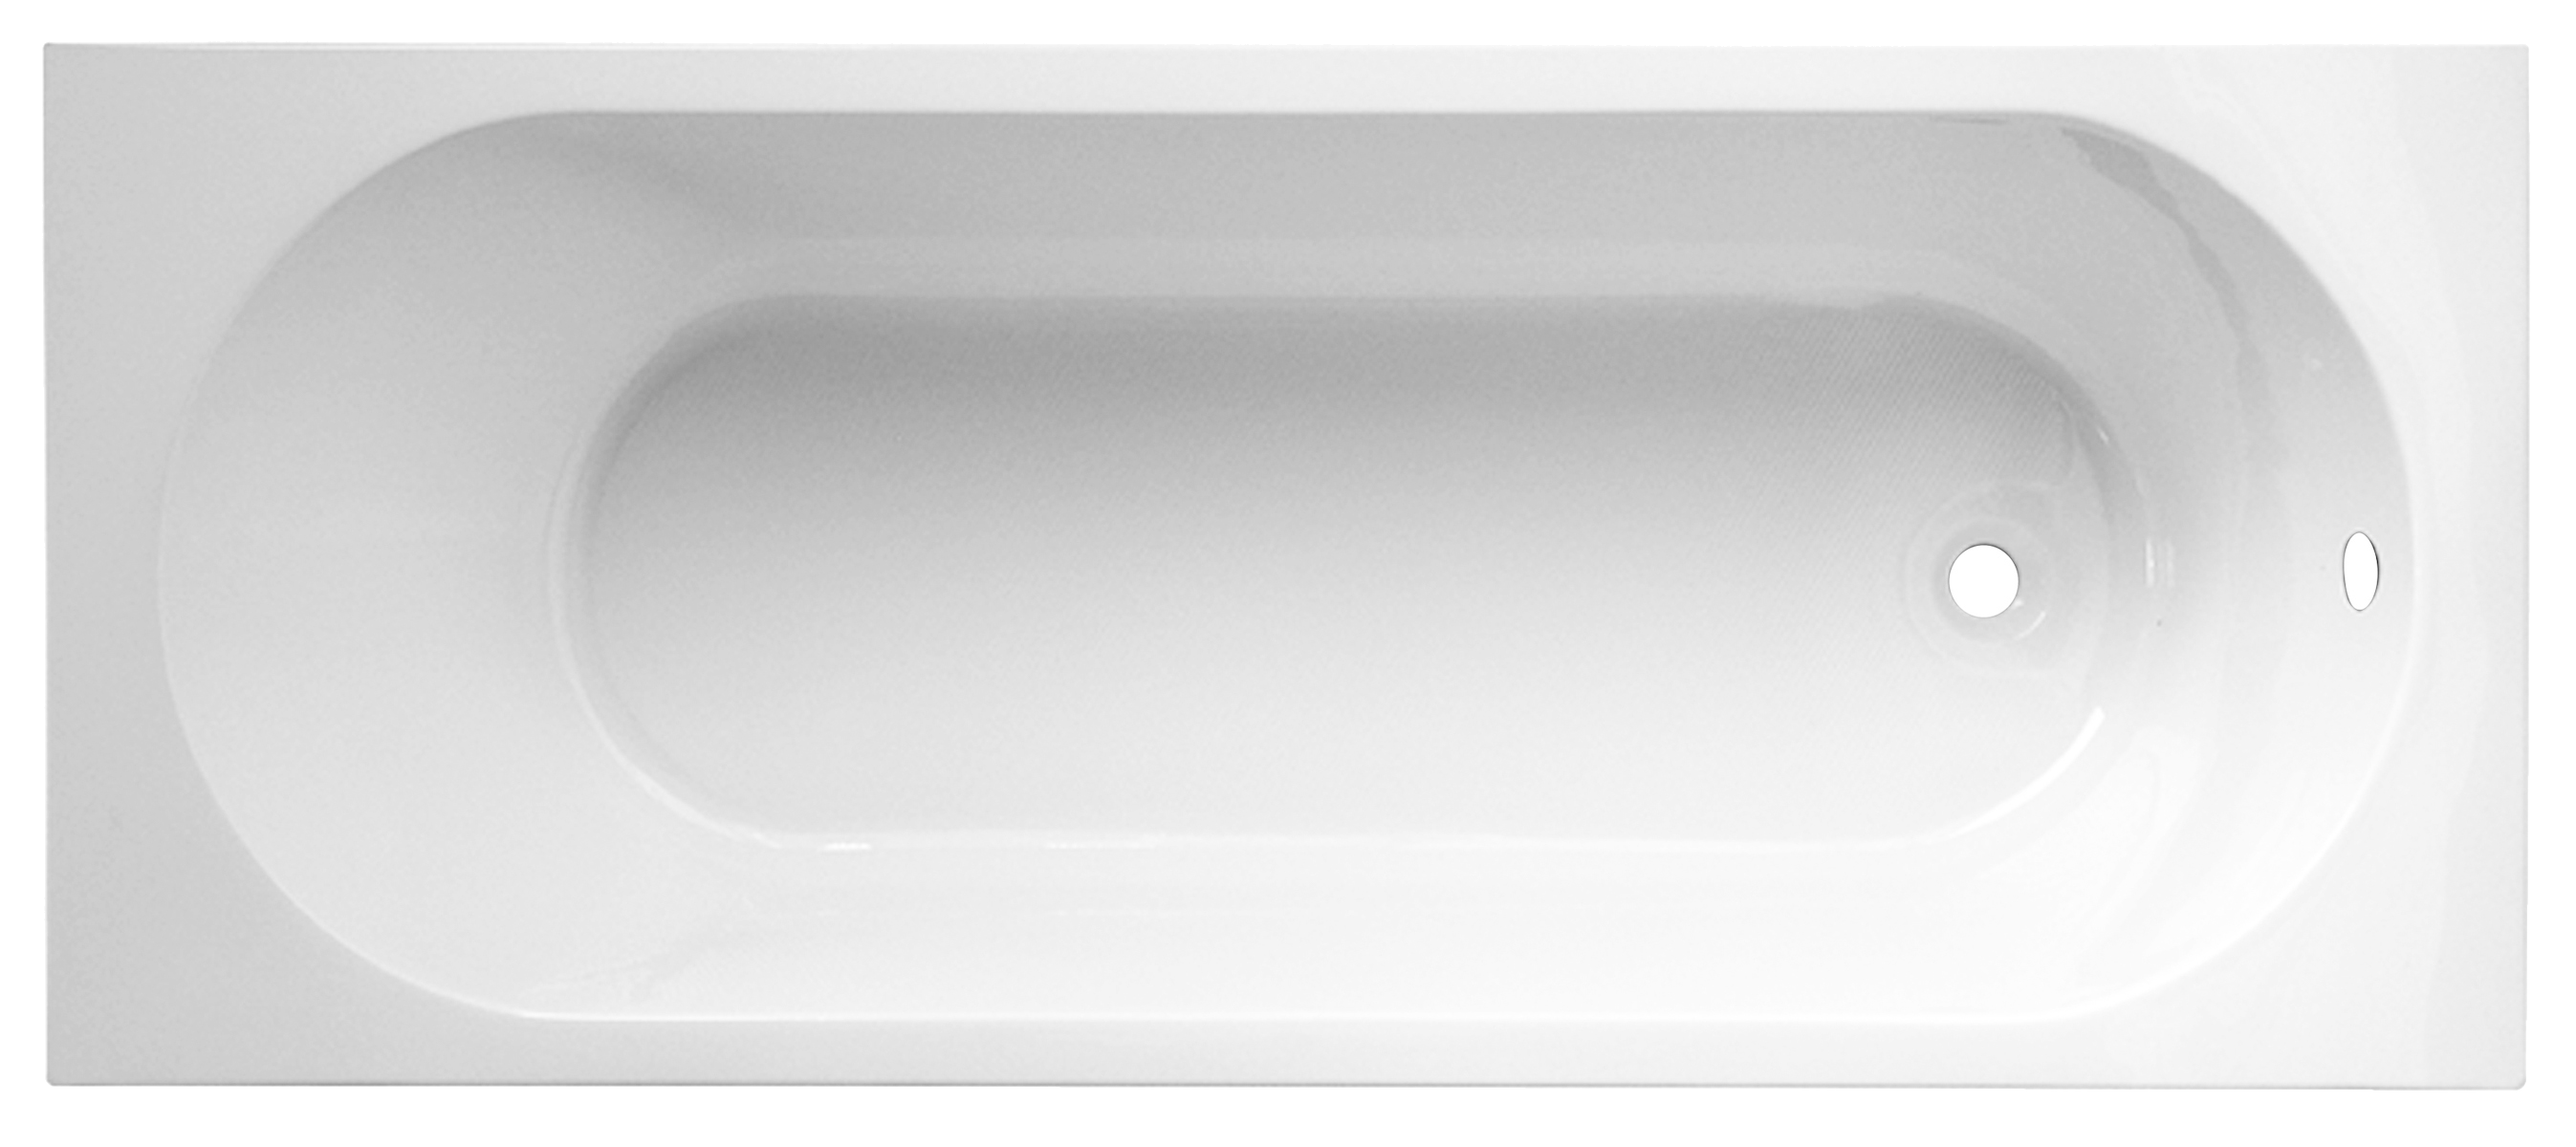 Bañera rectangular sanycces nerea 160x75x40 cm